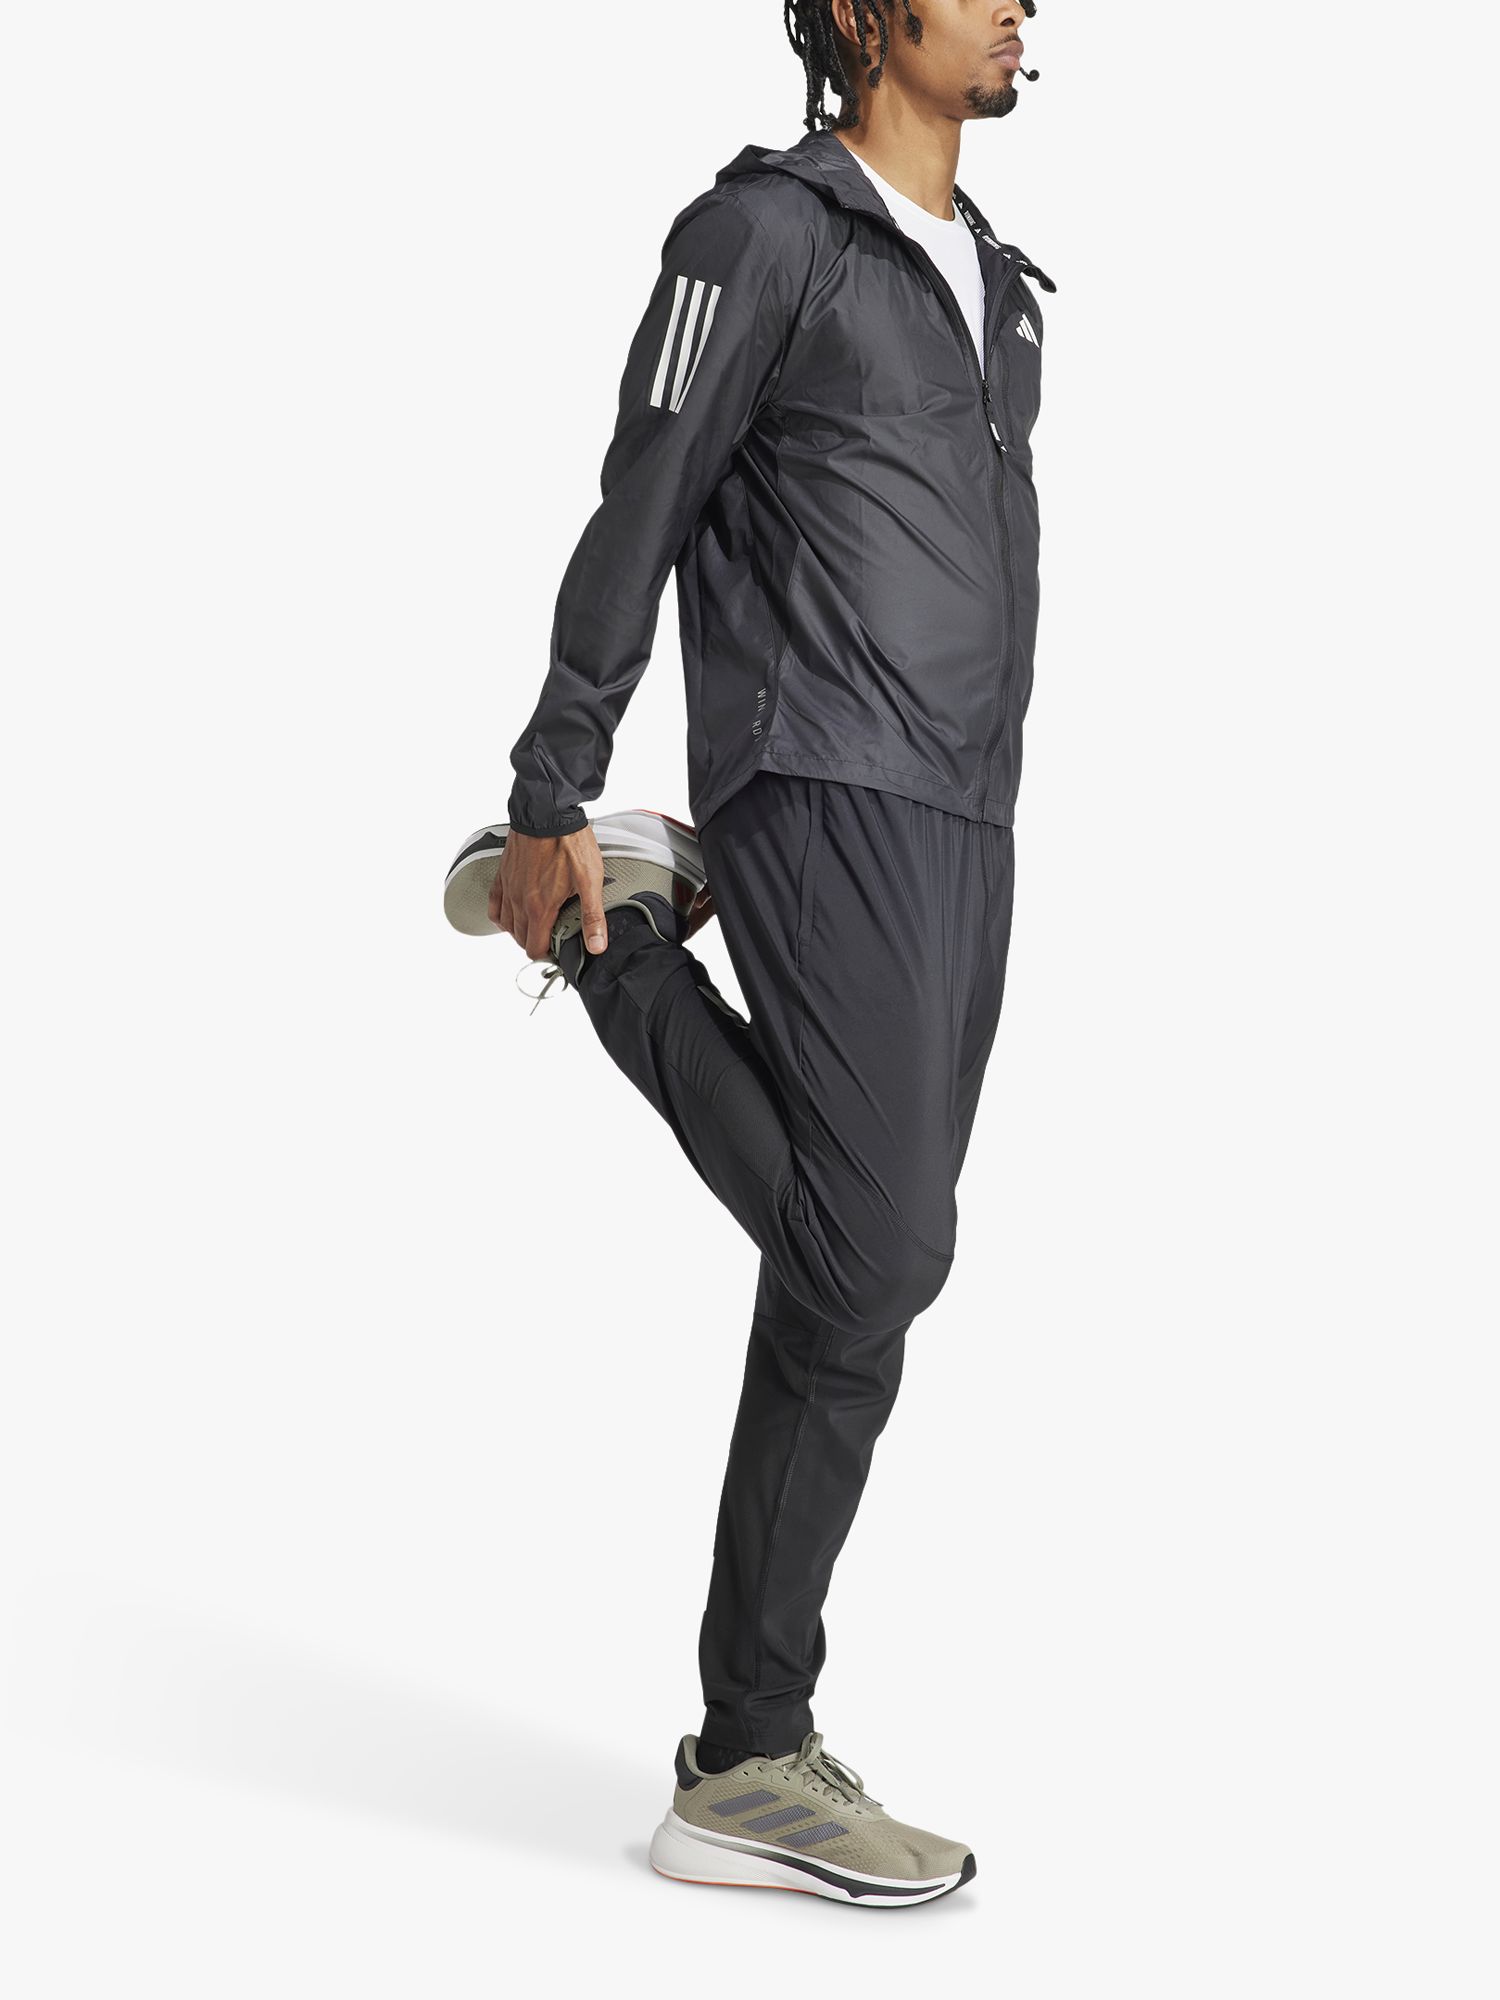 adidas Own The Run Men's Running Jacket, Black, XL